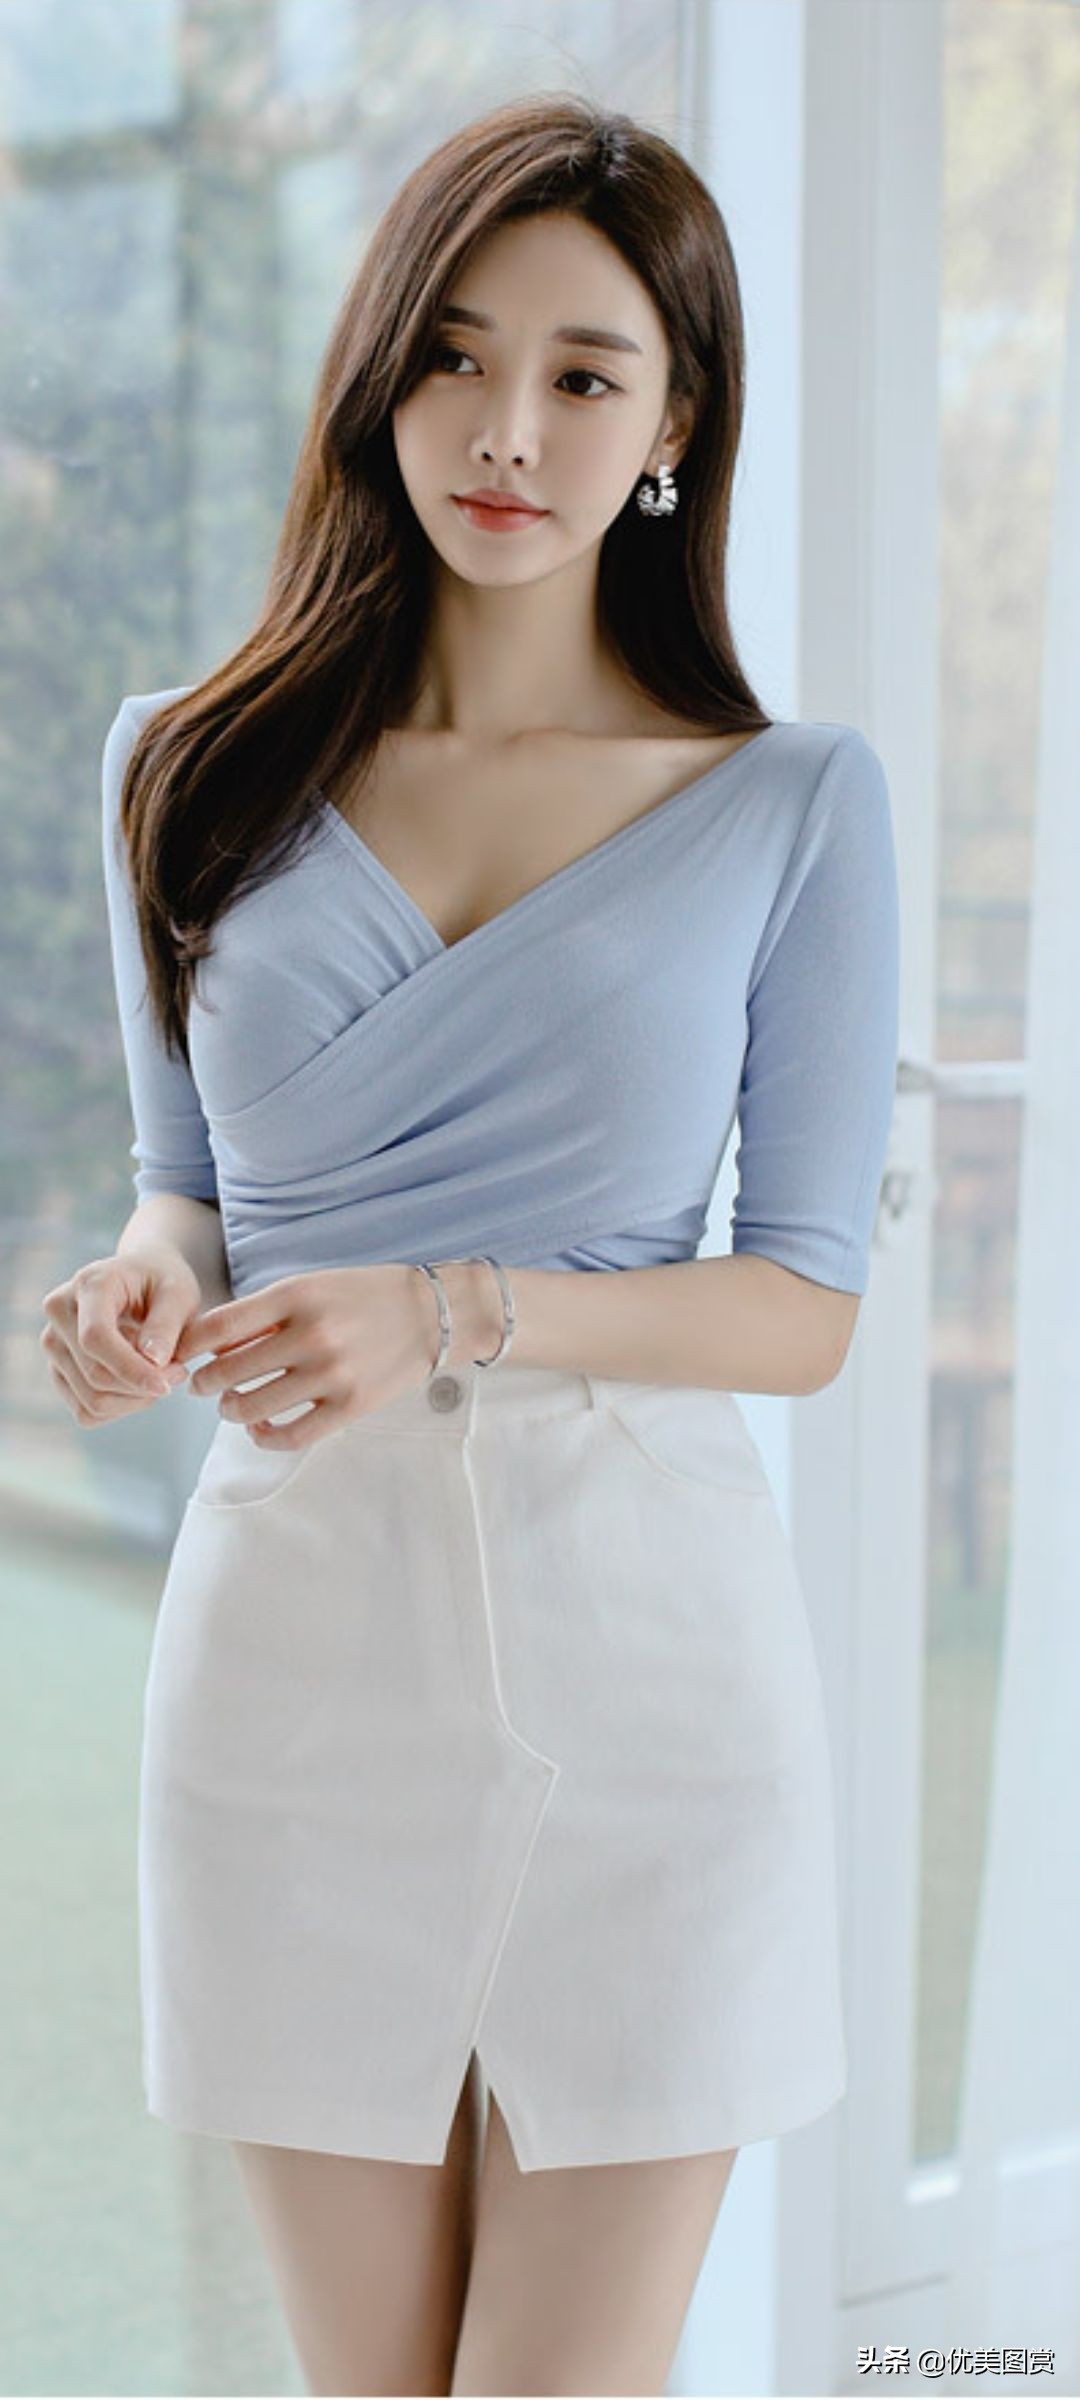 Sun Yunzhu Fashion Photo: Slender lady, charming and moving - iNEWS